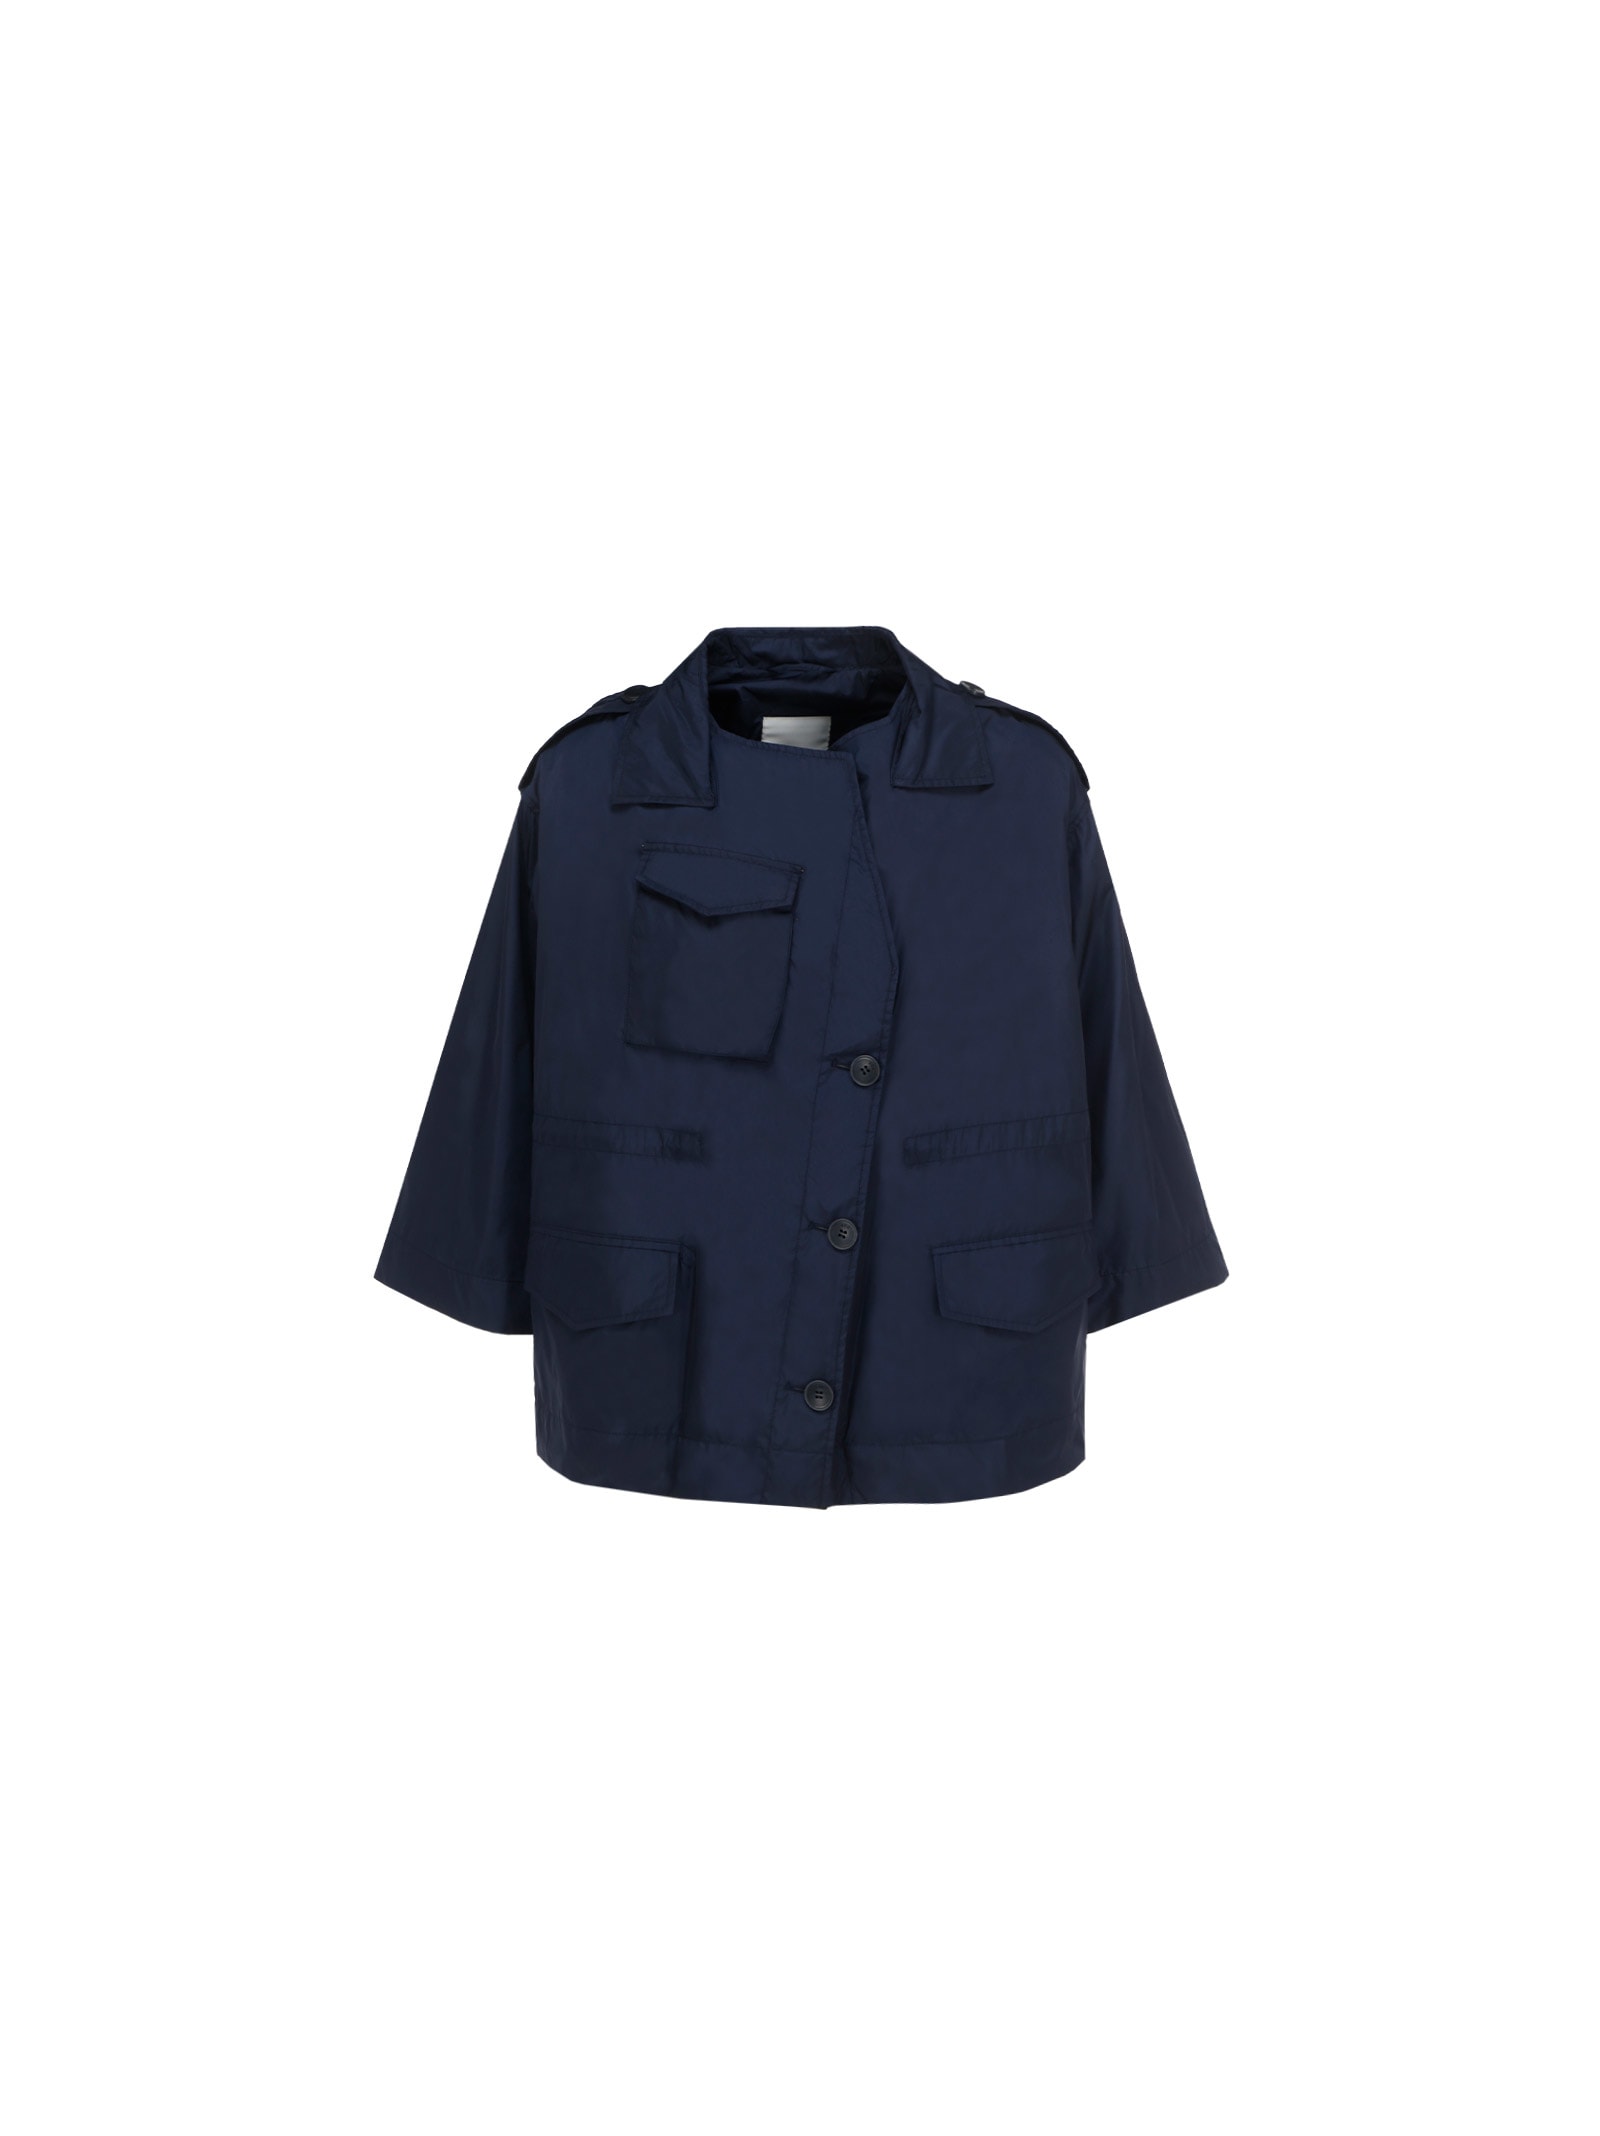 Add Women's 5aw0023697 Blue Other Materials Outerwear Jacket